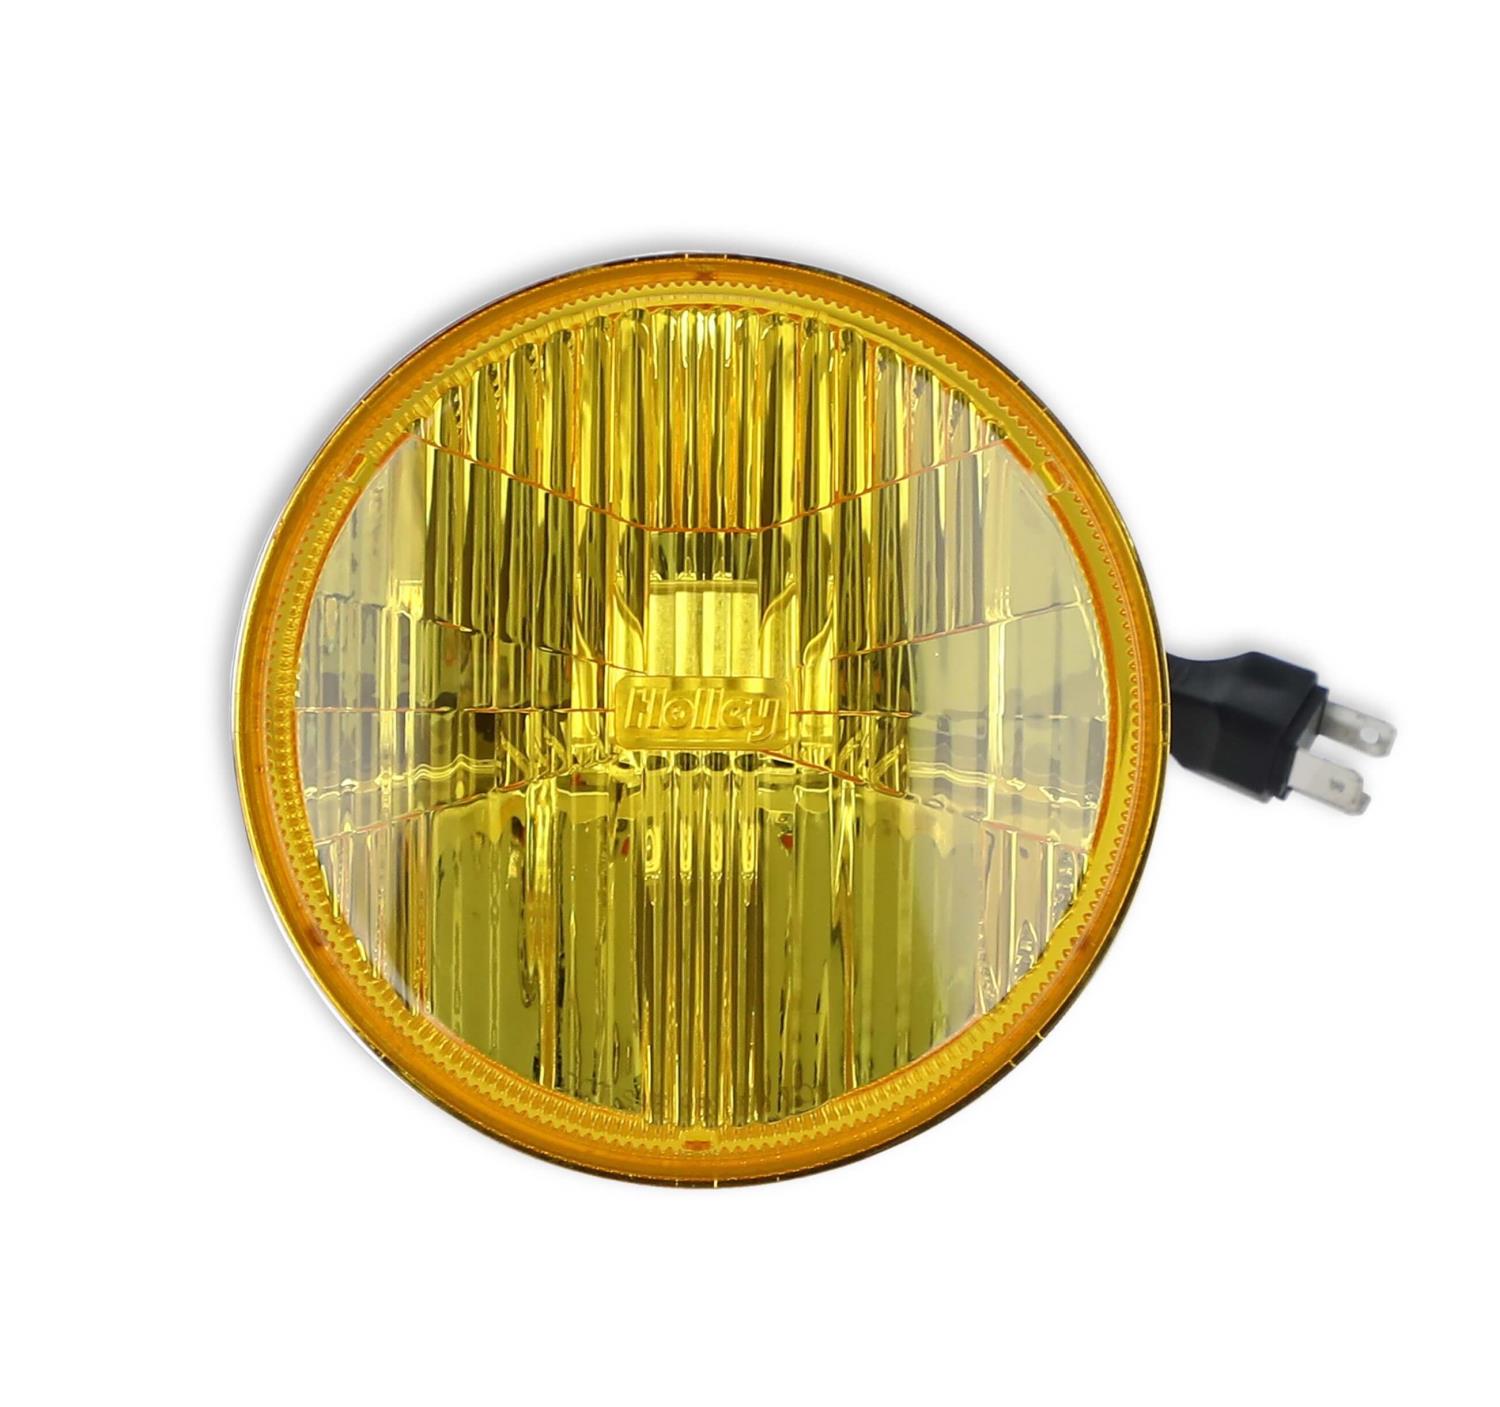 LFRB105 RetroBright LED 5 3/4 in. Round Headlight